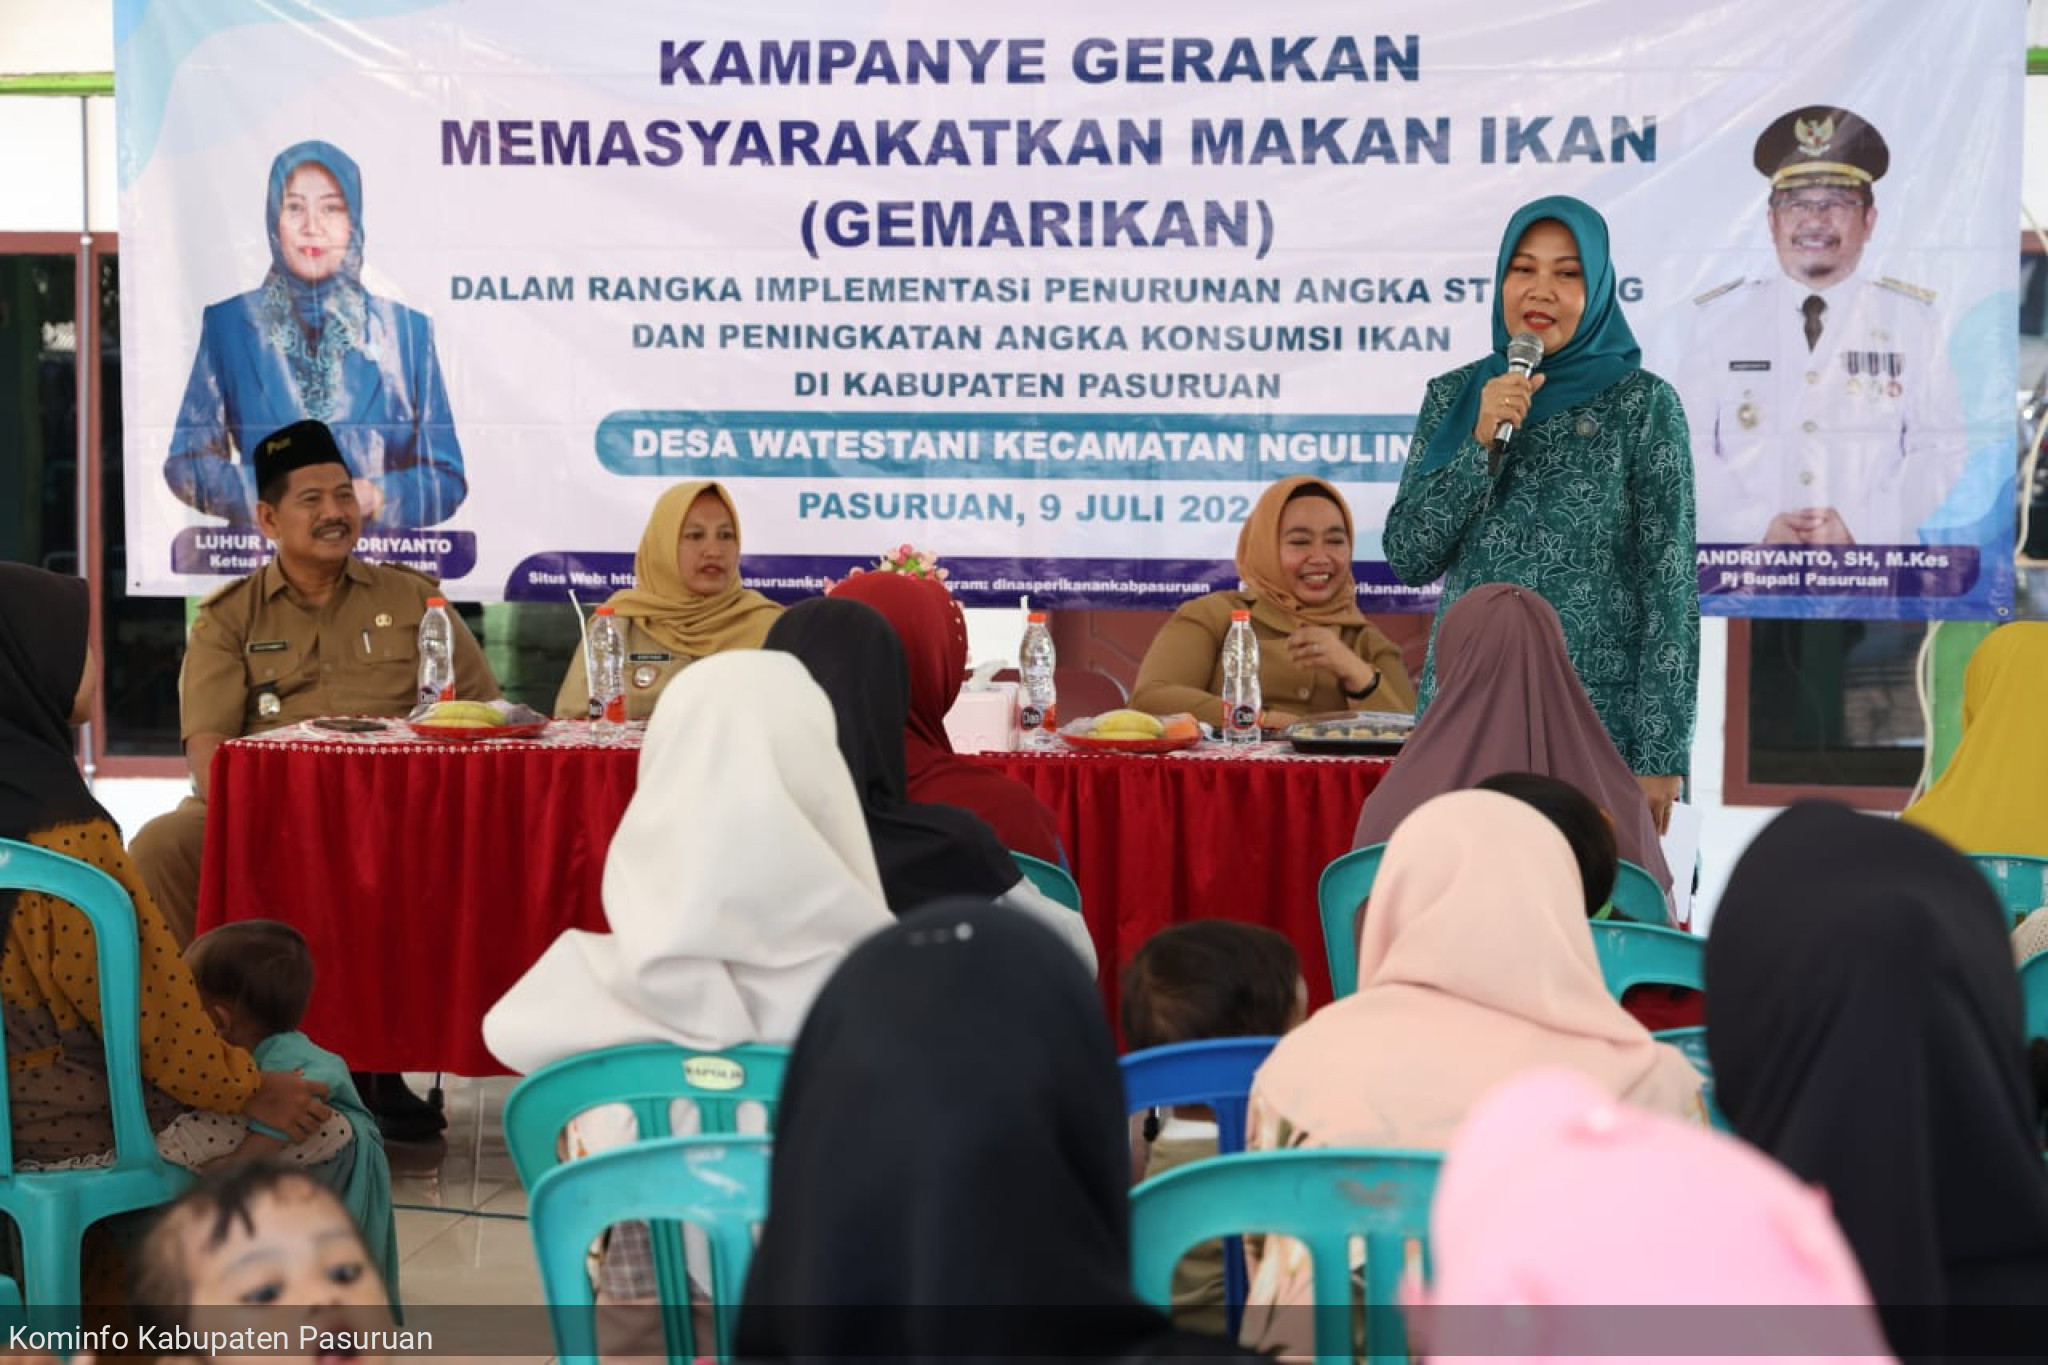 Kampanye Gemarikan di Kecamatan Nguling, Ny. Luhur Andriyanto Ajak Warga Manfaatkan Potensi Ikan Sebagai Sumber Protein dan Income Keluarga